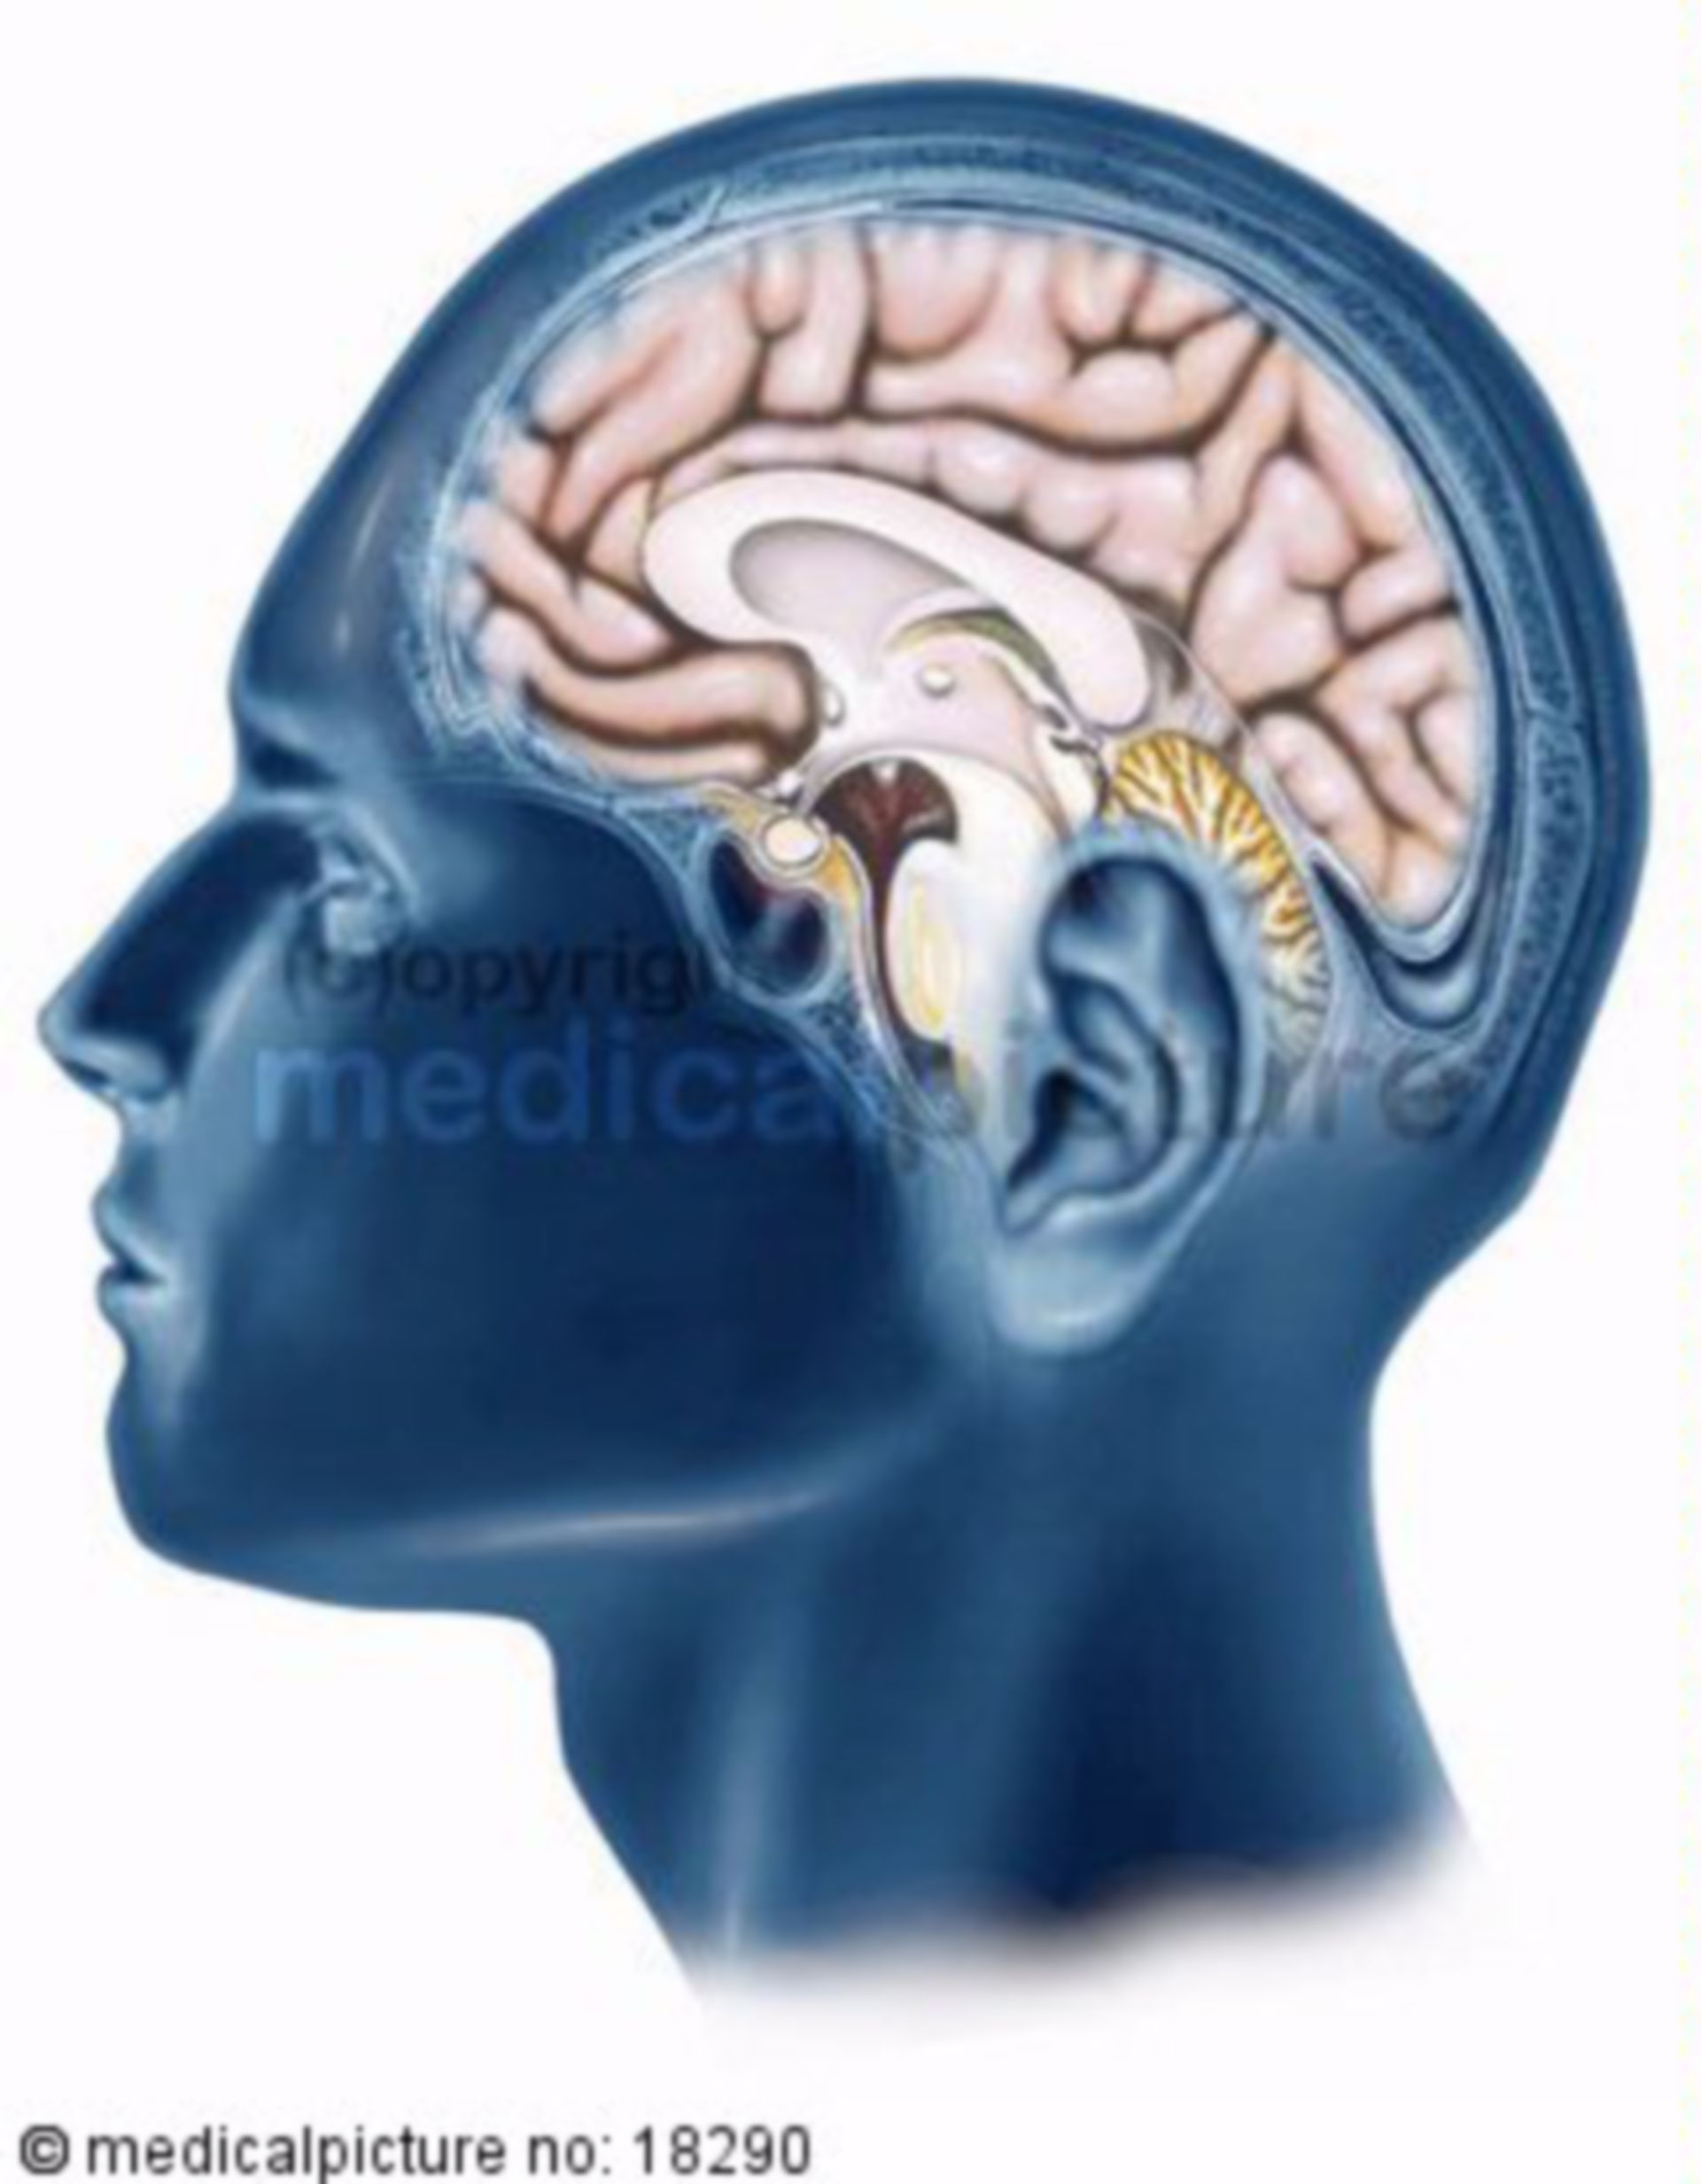  Gehirn in einfarbigem Kopf, brain in single-colored head 
